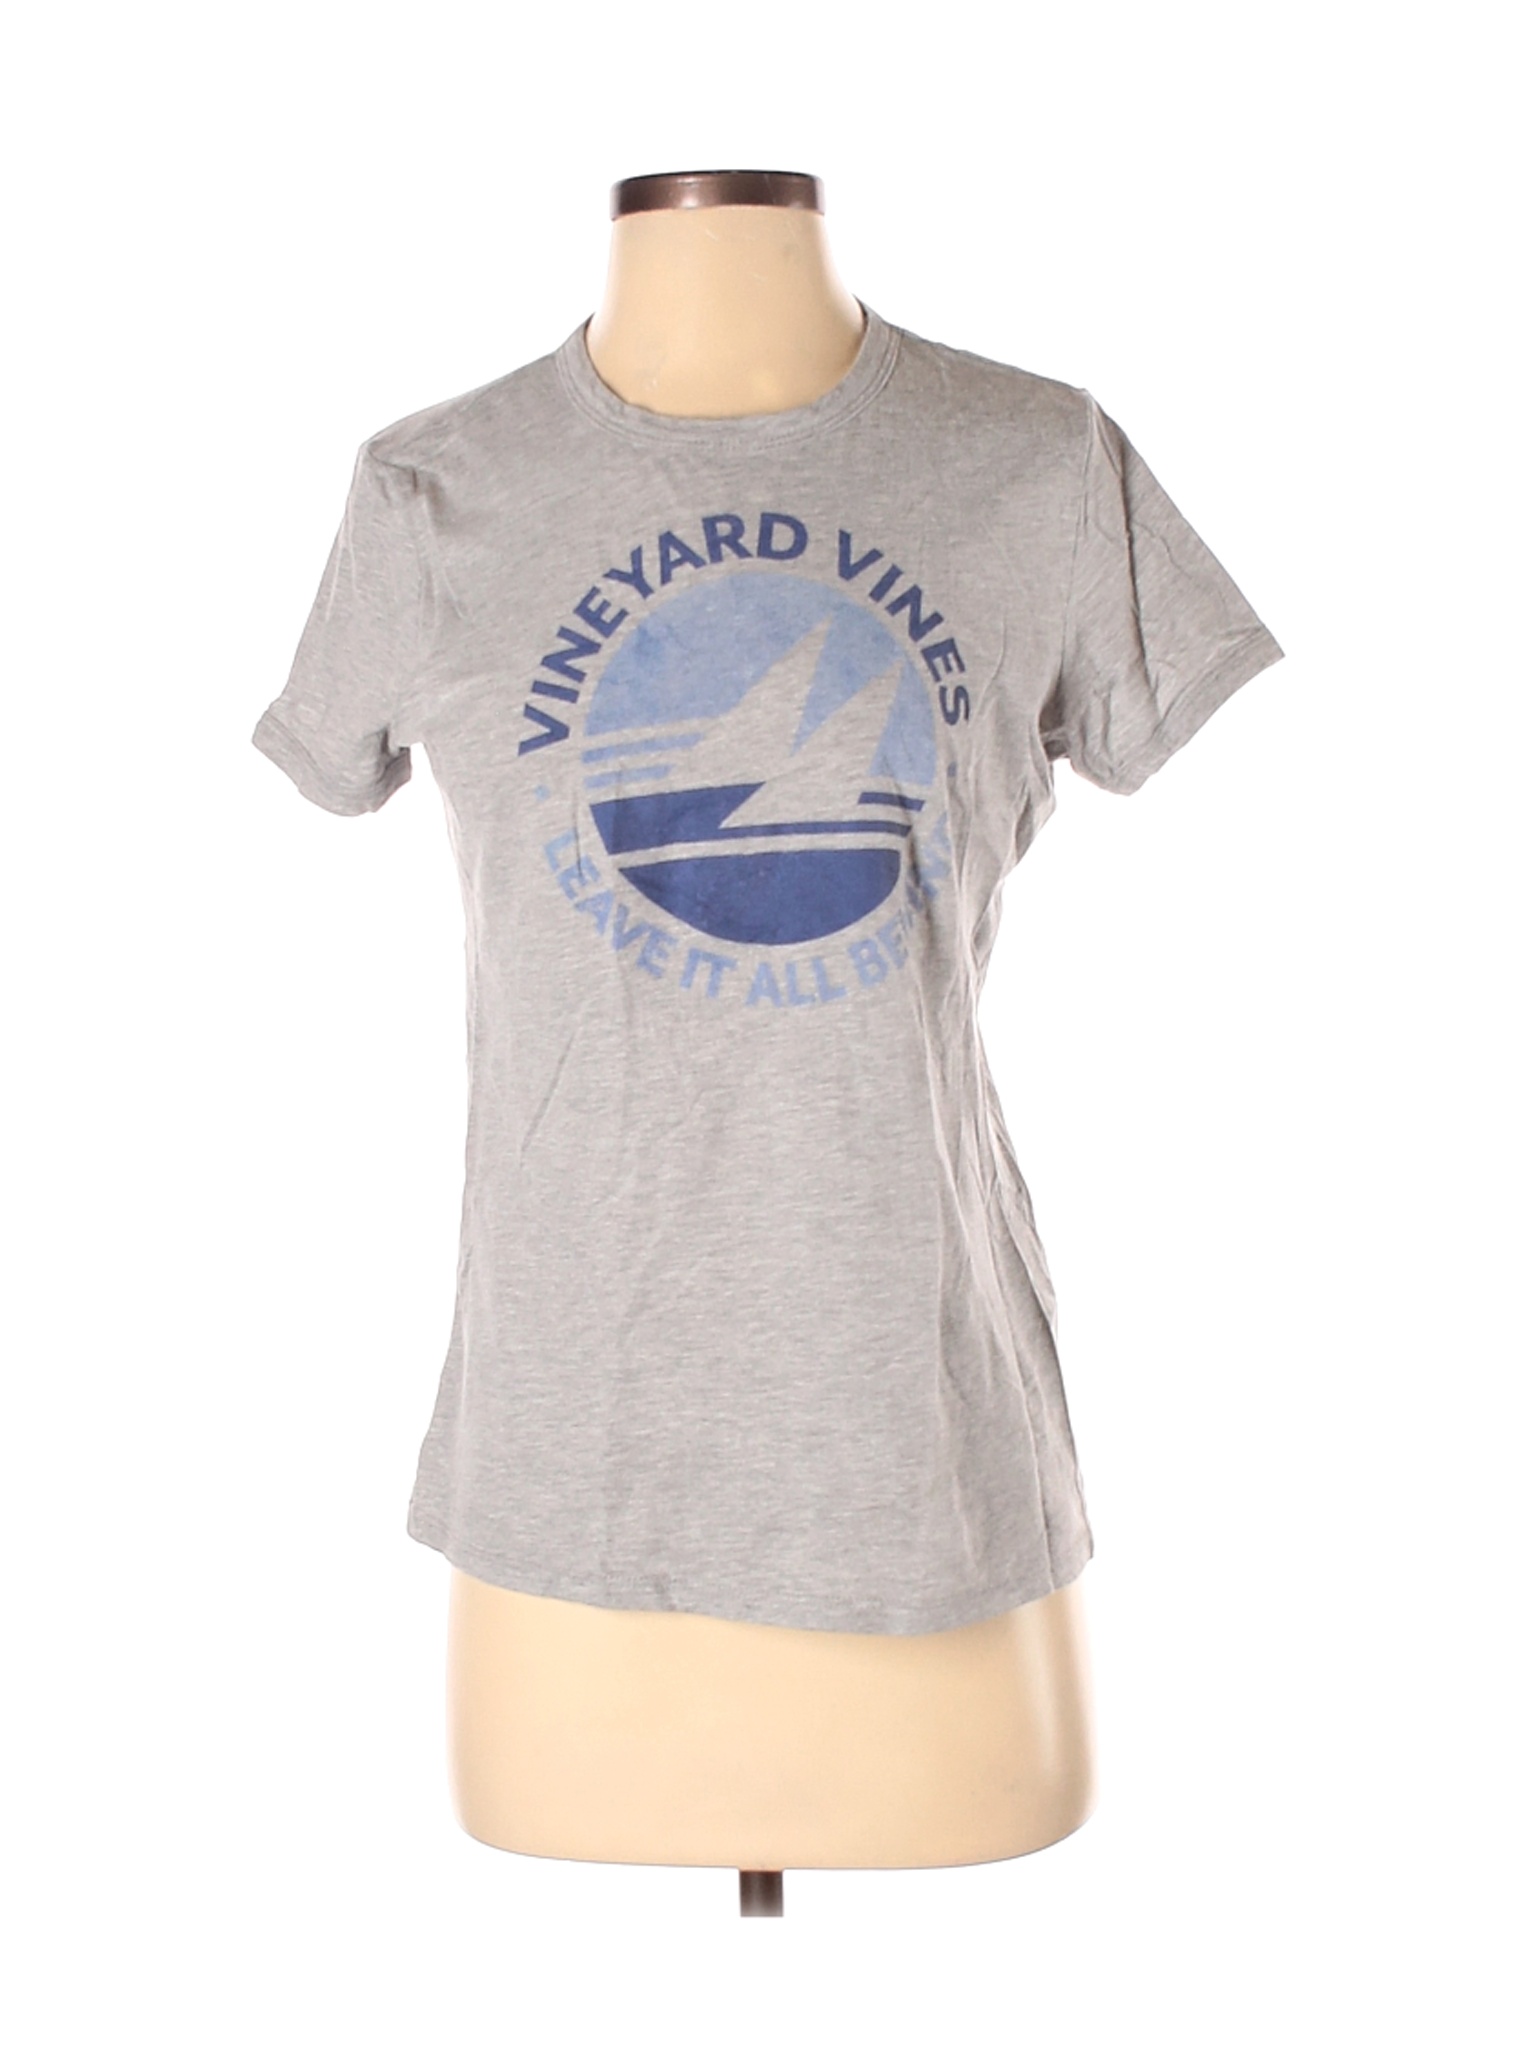 Vineyard Vines Women Gray Short Sleeve T-Shirt S | eBay